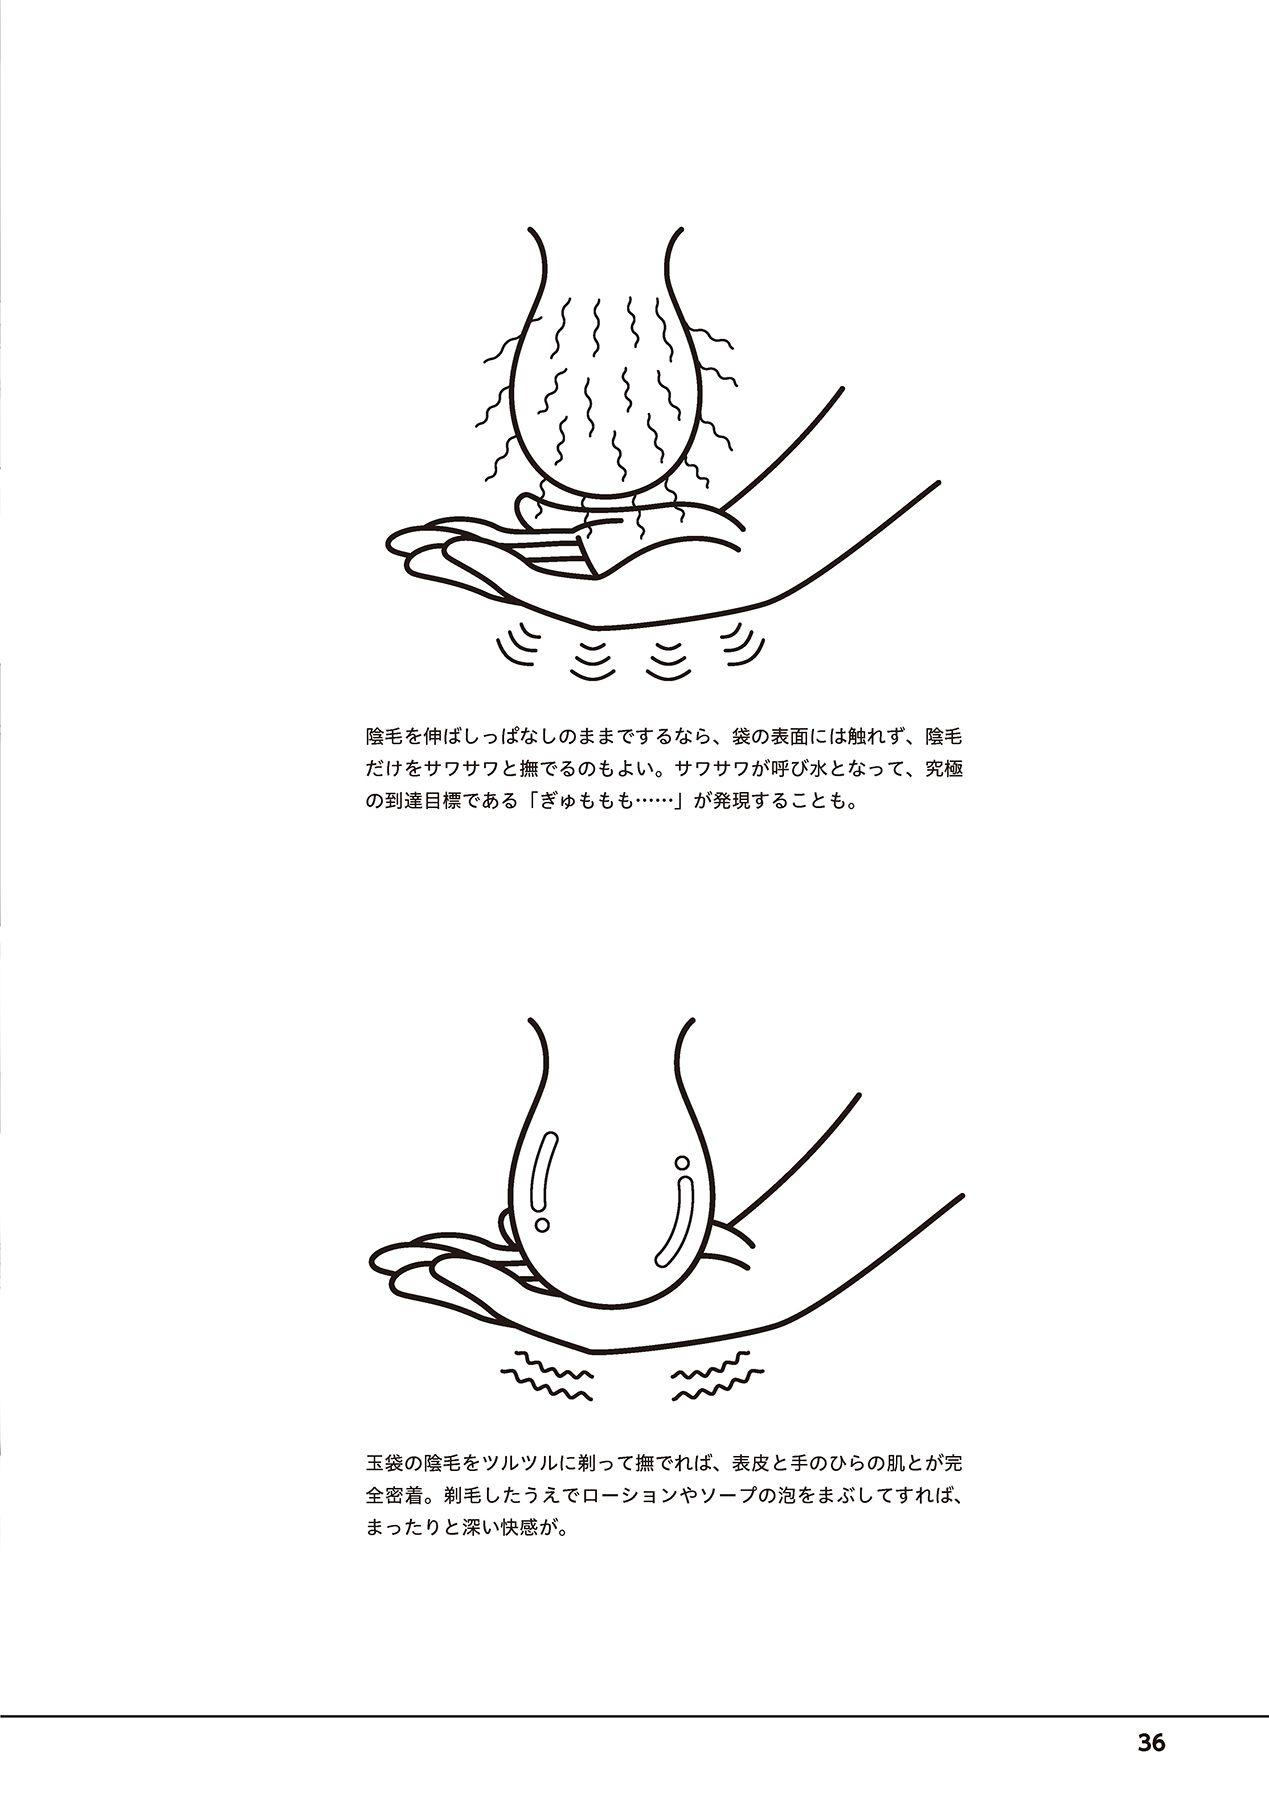 Otoko no Jii Onanie Kanzen Manual Illustration Han...... Onanie Play 37